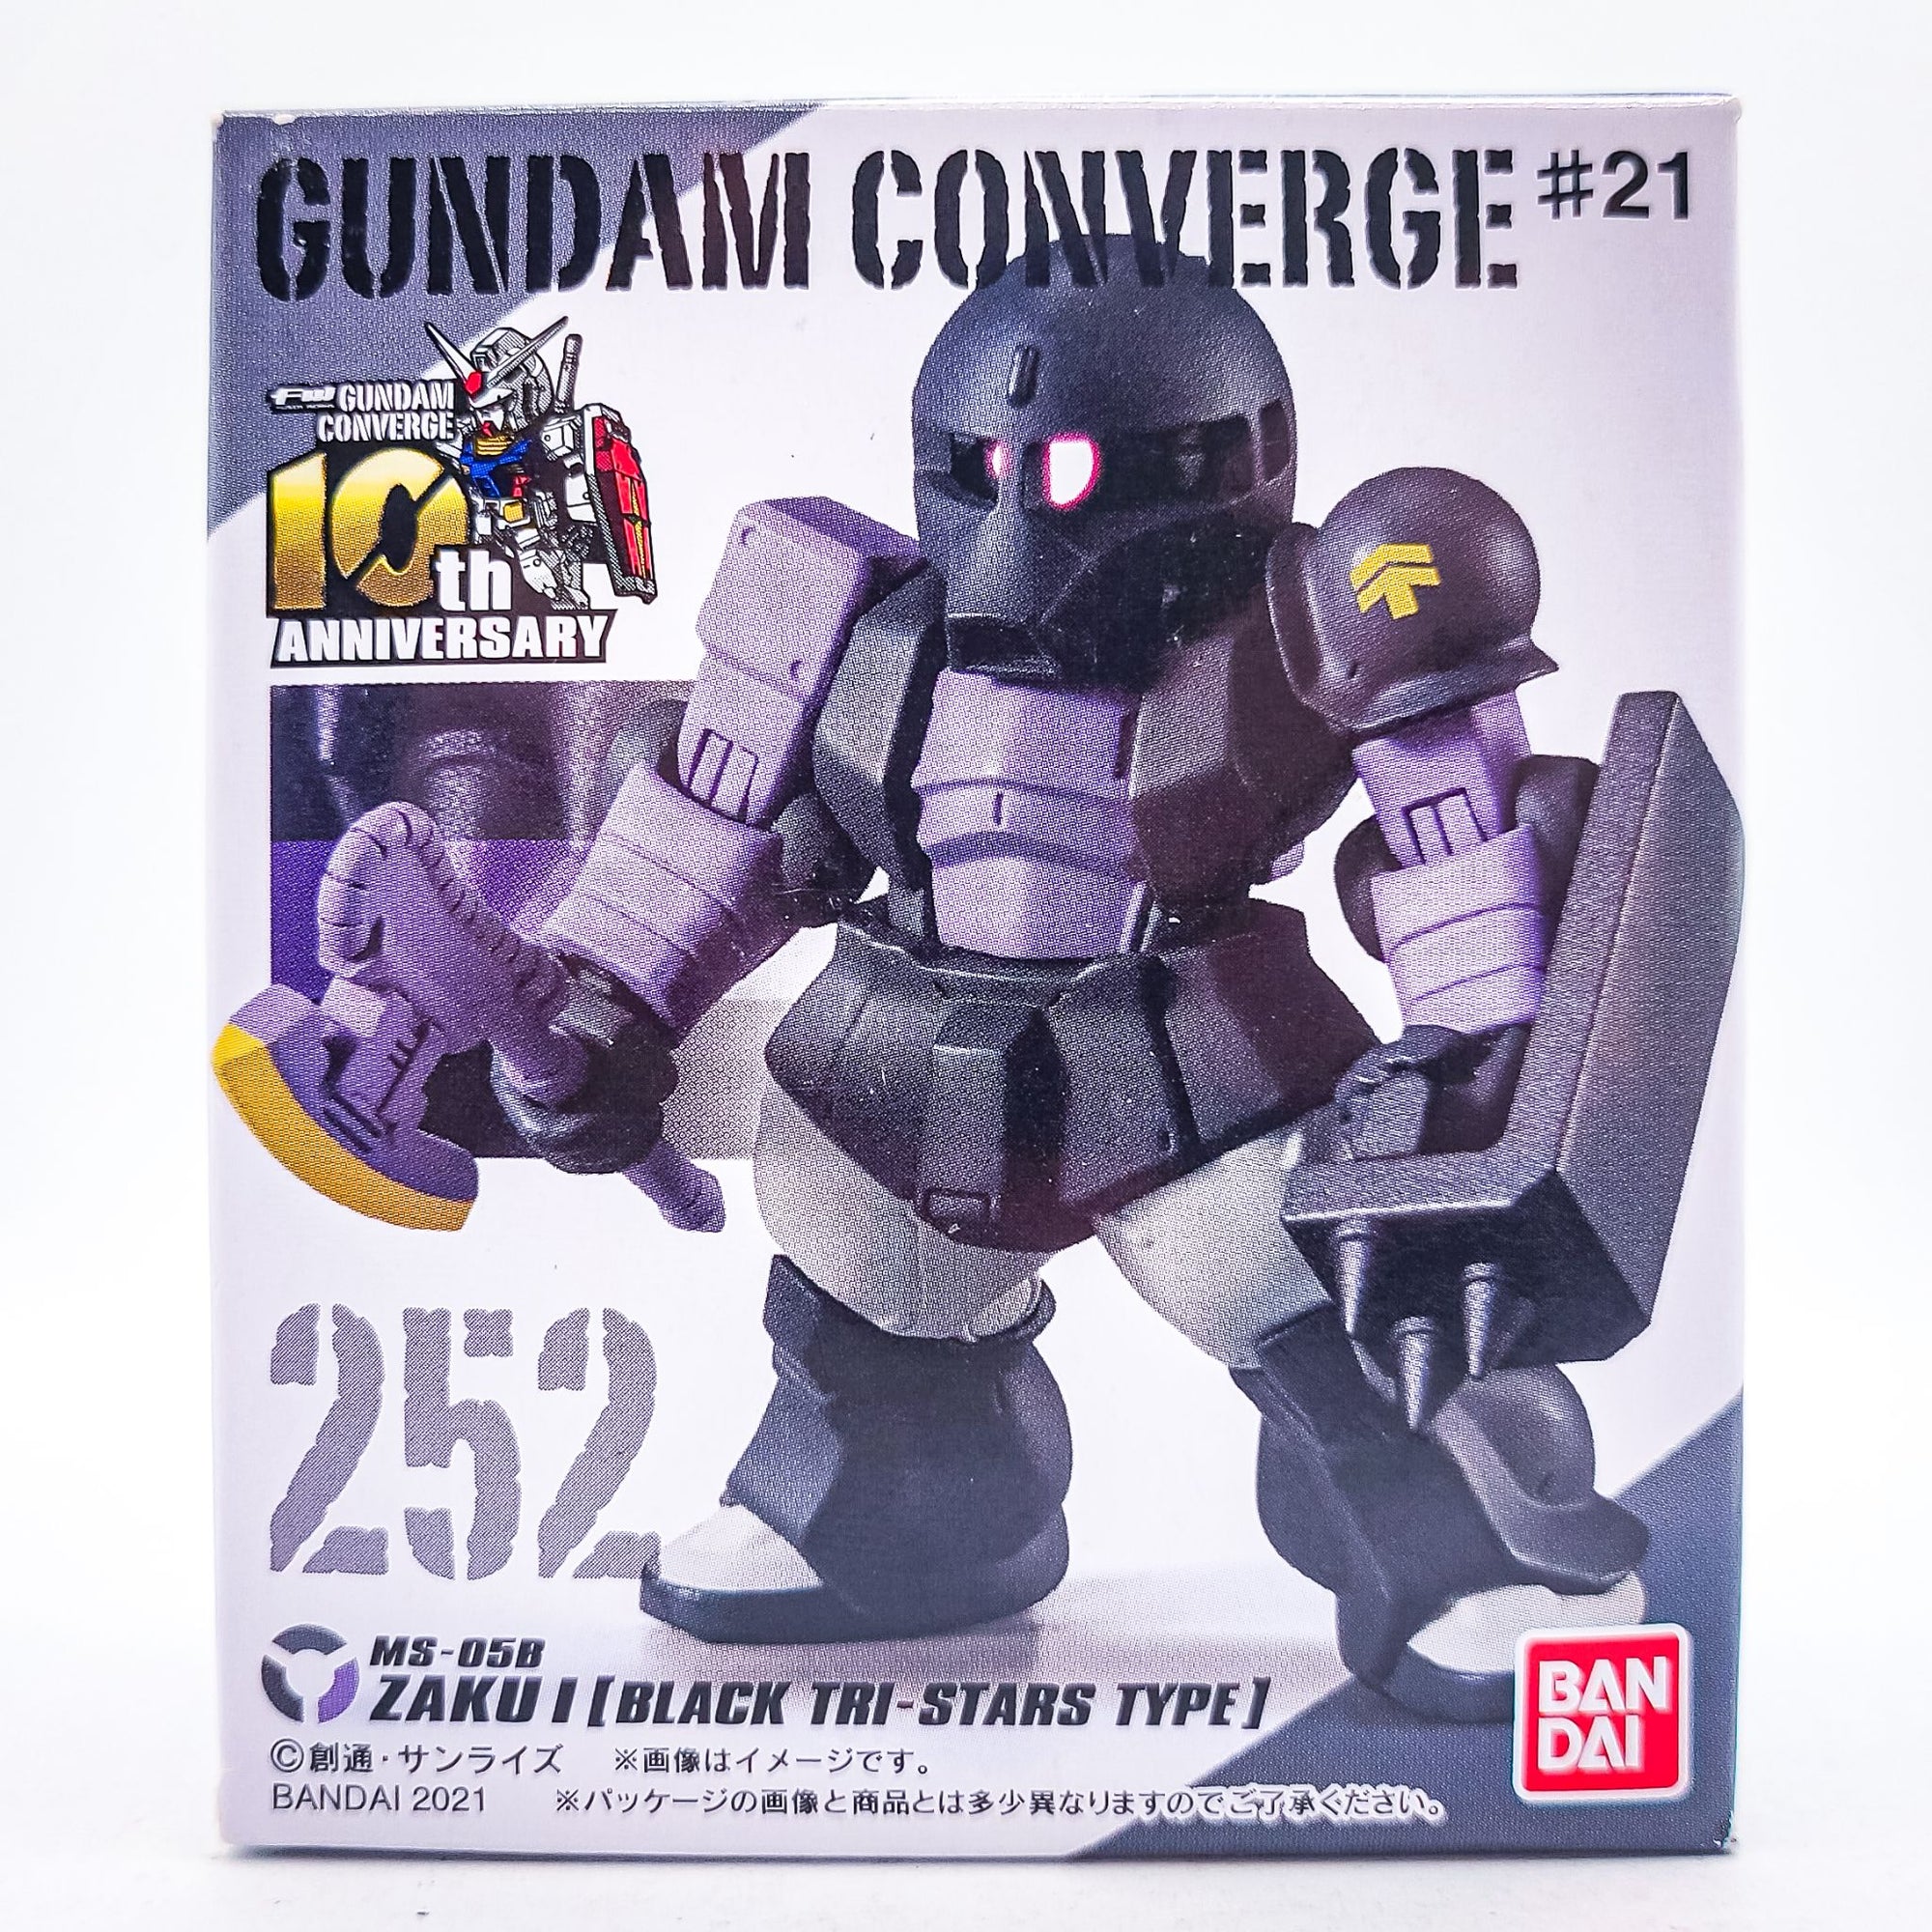 Gundam Converge #252 Zaku I Black Tri-Stars Type by Bandai - 1